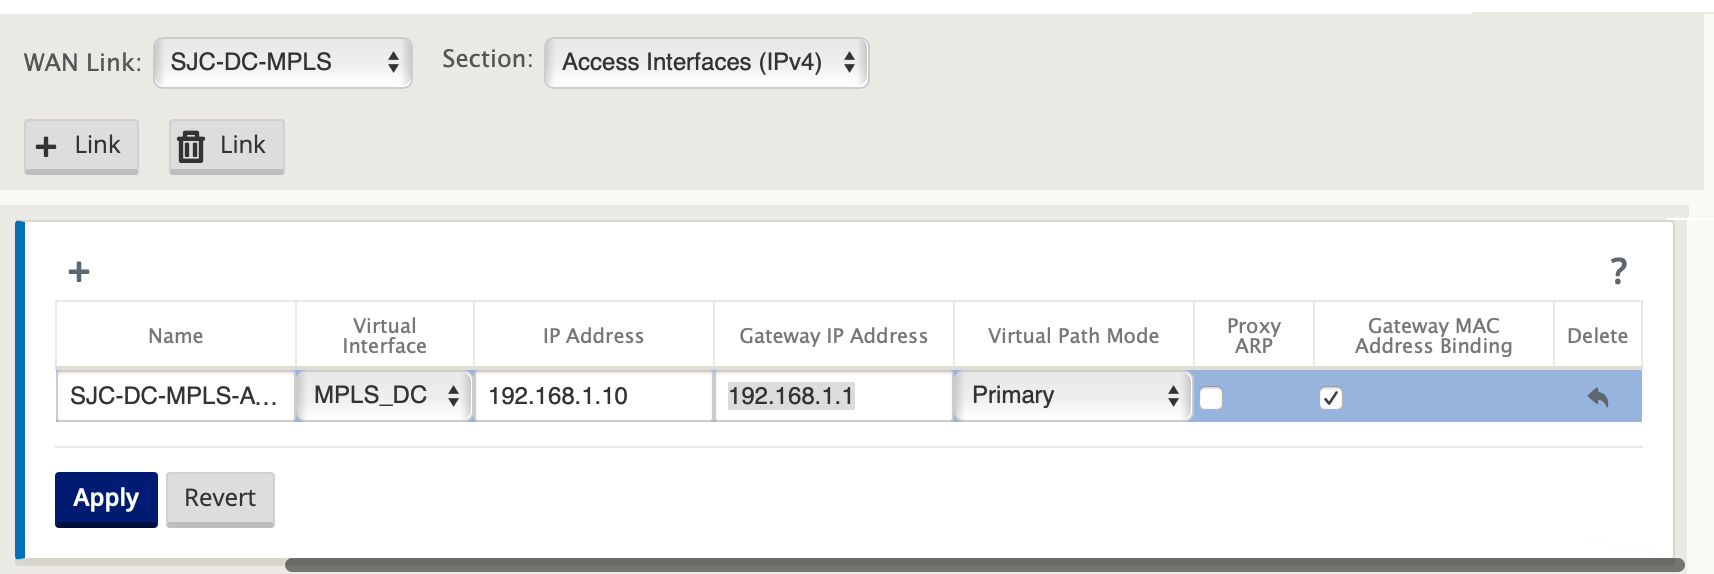 Interfaces de acceso MPLS